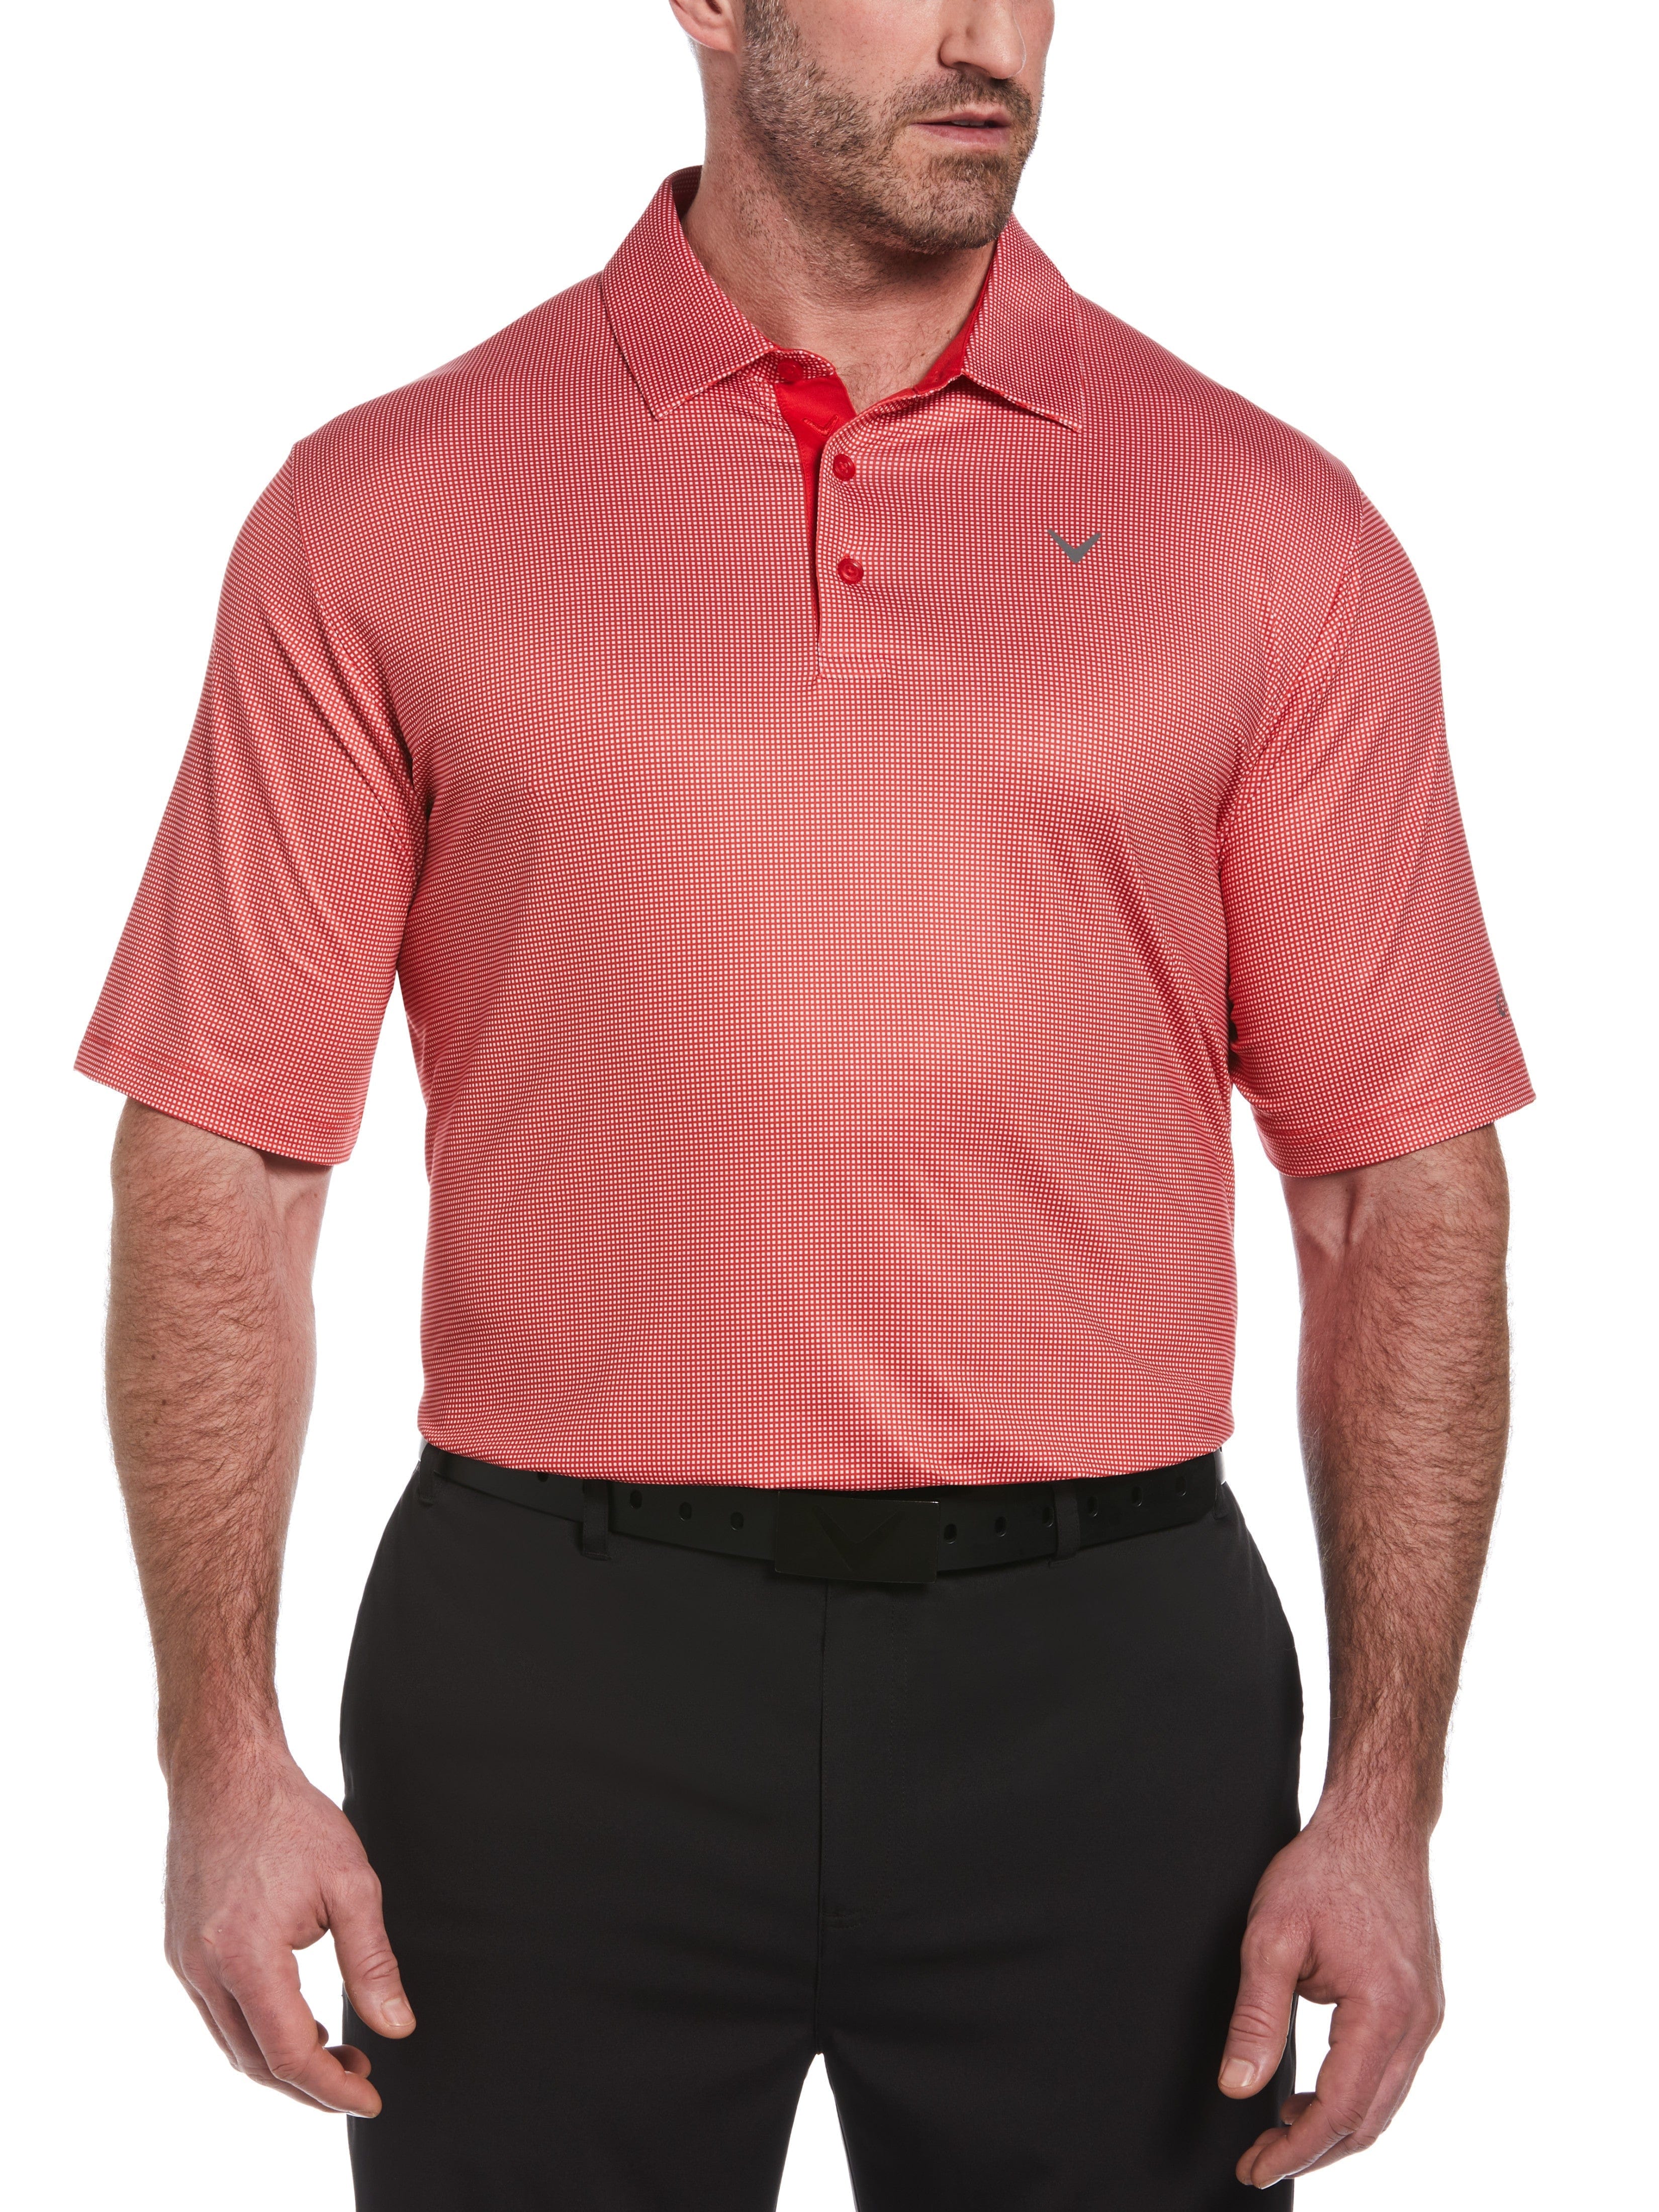 Callaway Apparel Mens Big & Tall Printed Gingham Swing Tech Polo Shirt, Size 1X, Tango Red, Polyester/Elastane | Golf Apparel Shop